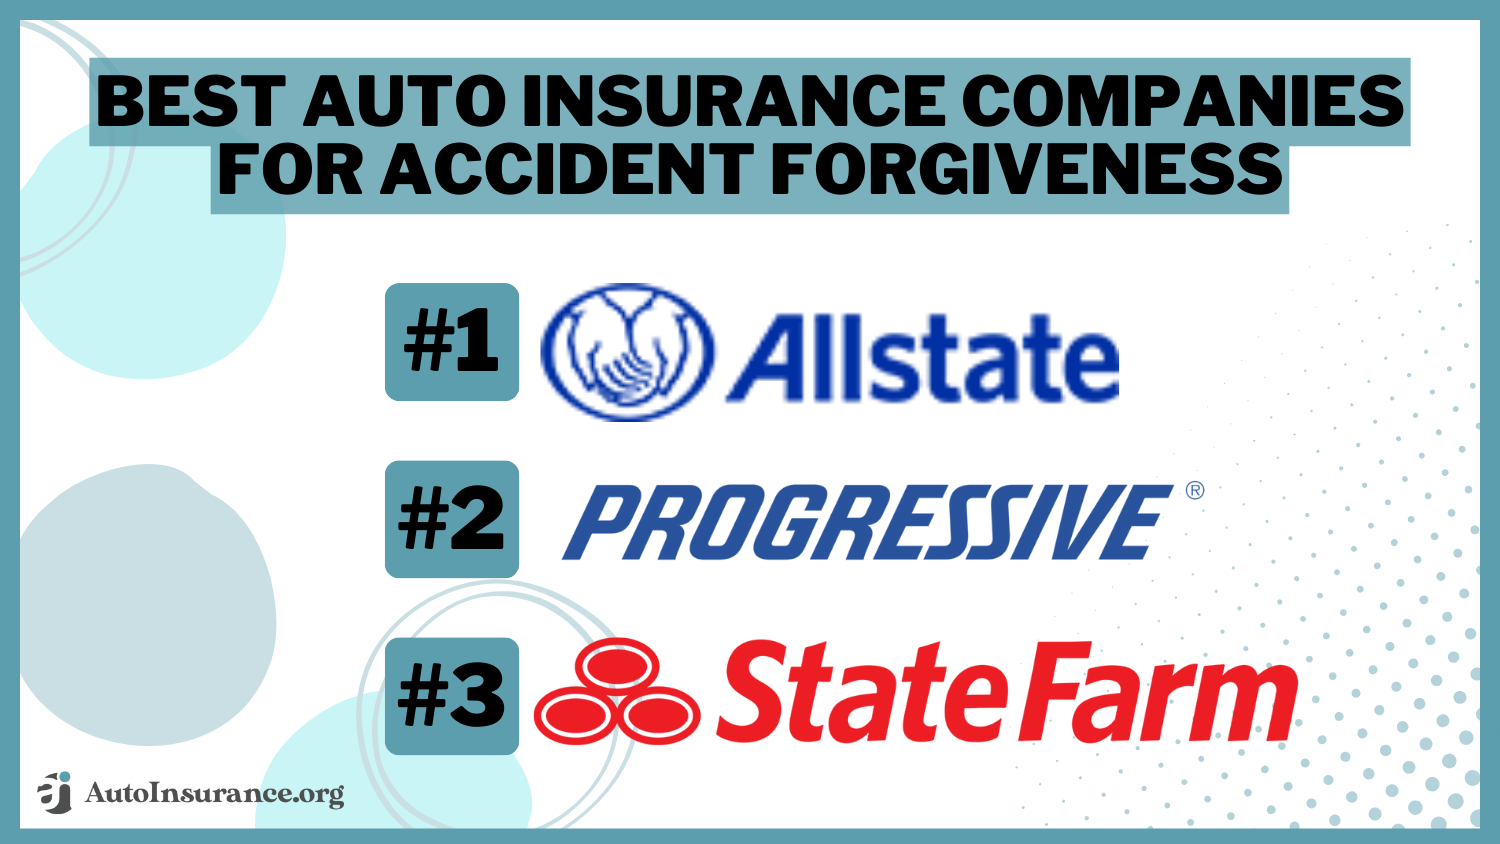 10 Best Auto Insurance Companies for Accident Forgiveness: Allstate, Progressive, and State Farm